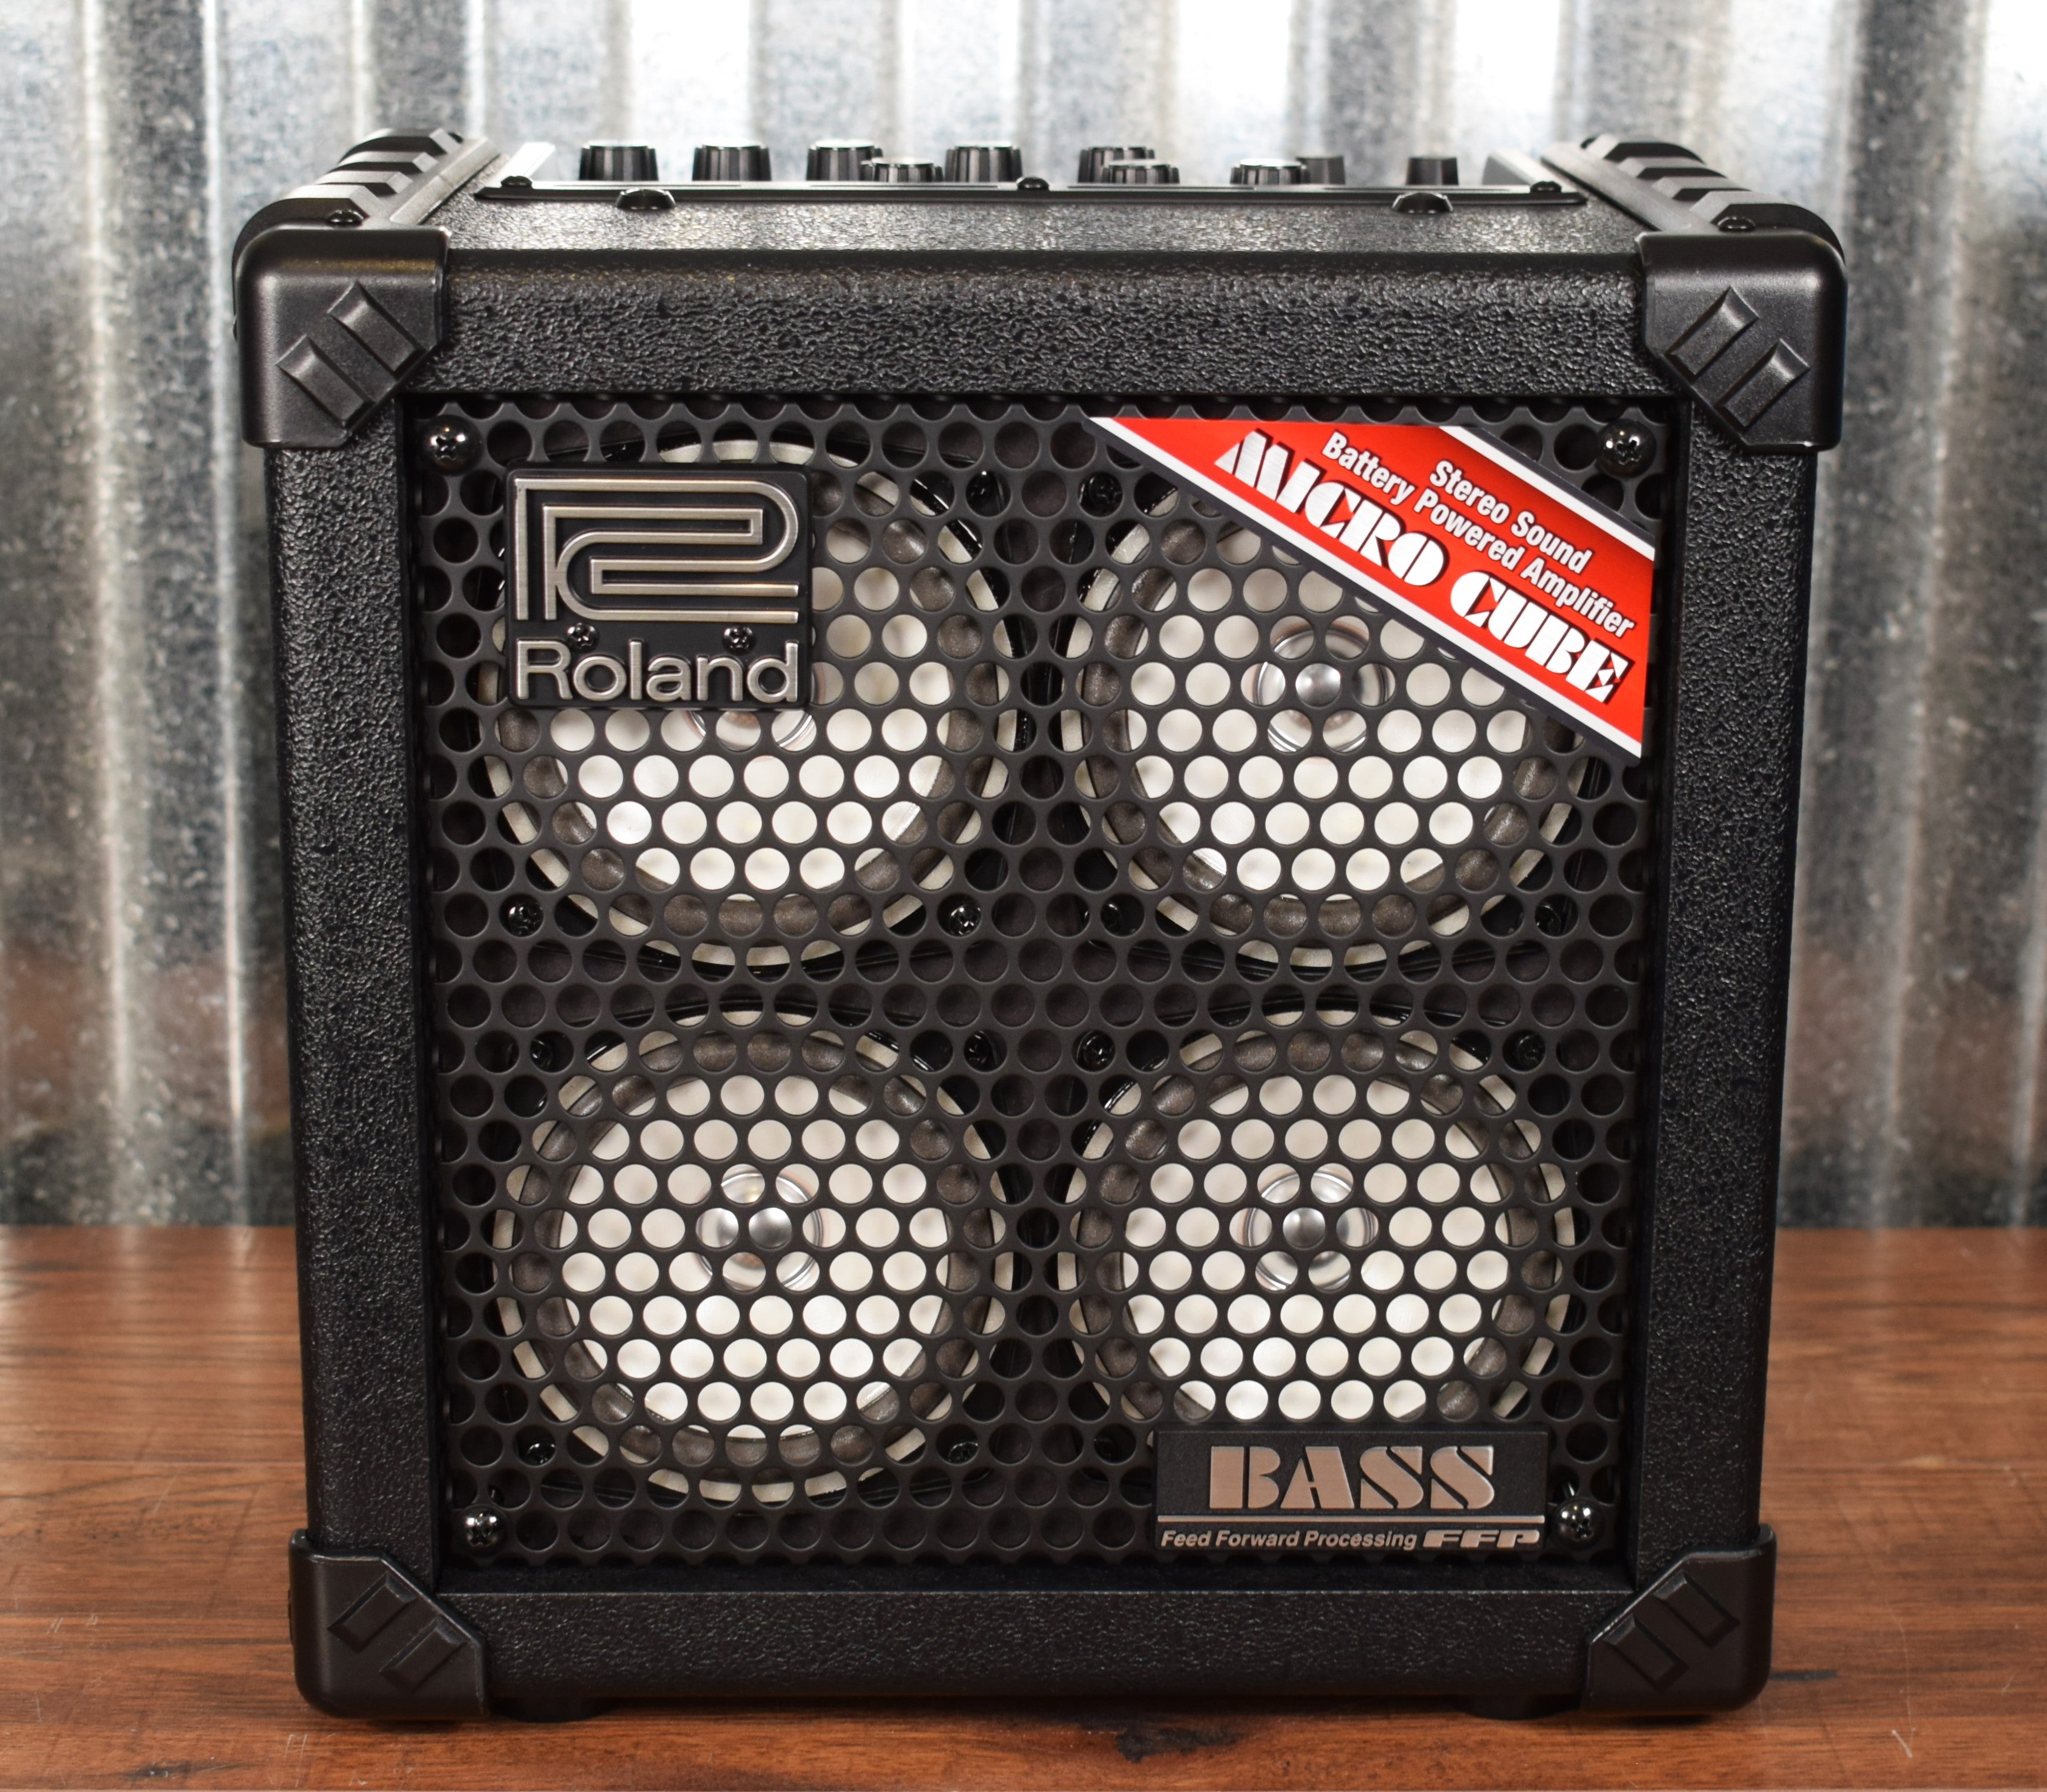 Roland Micro Cube Bass RX 4x4